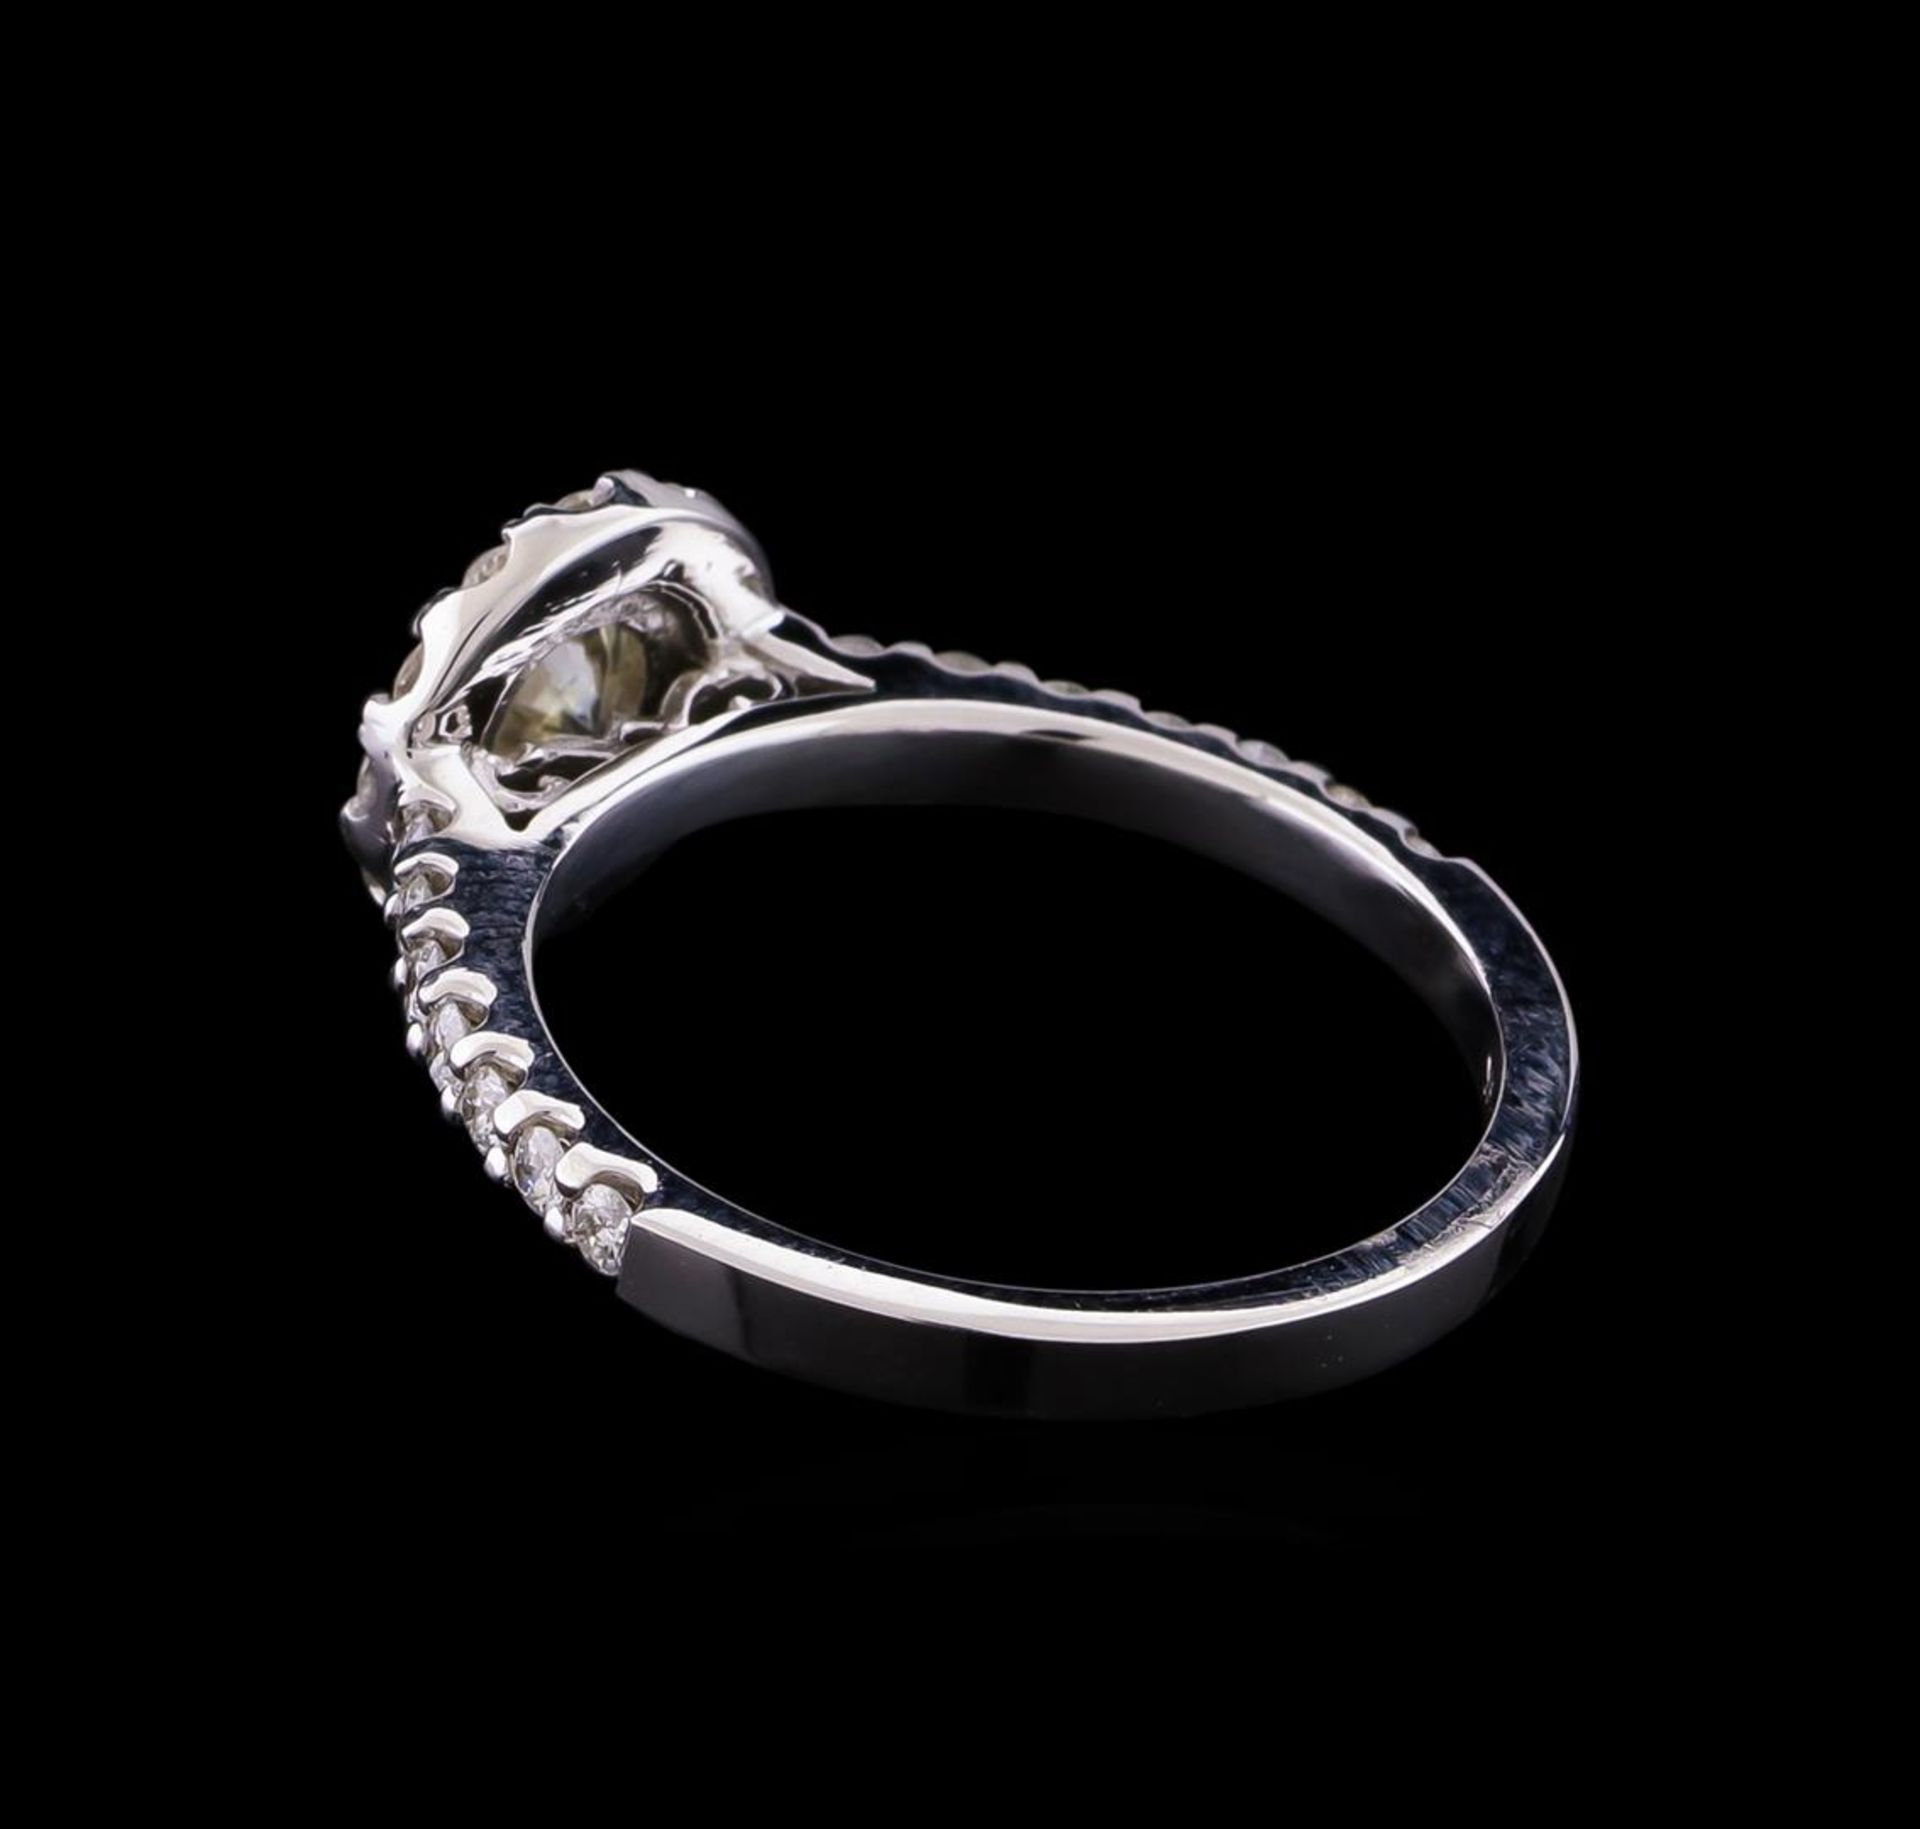 0.87 ctw Diamond Ring - 14KT White Gold - Image 3 of 4